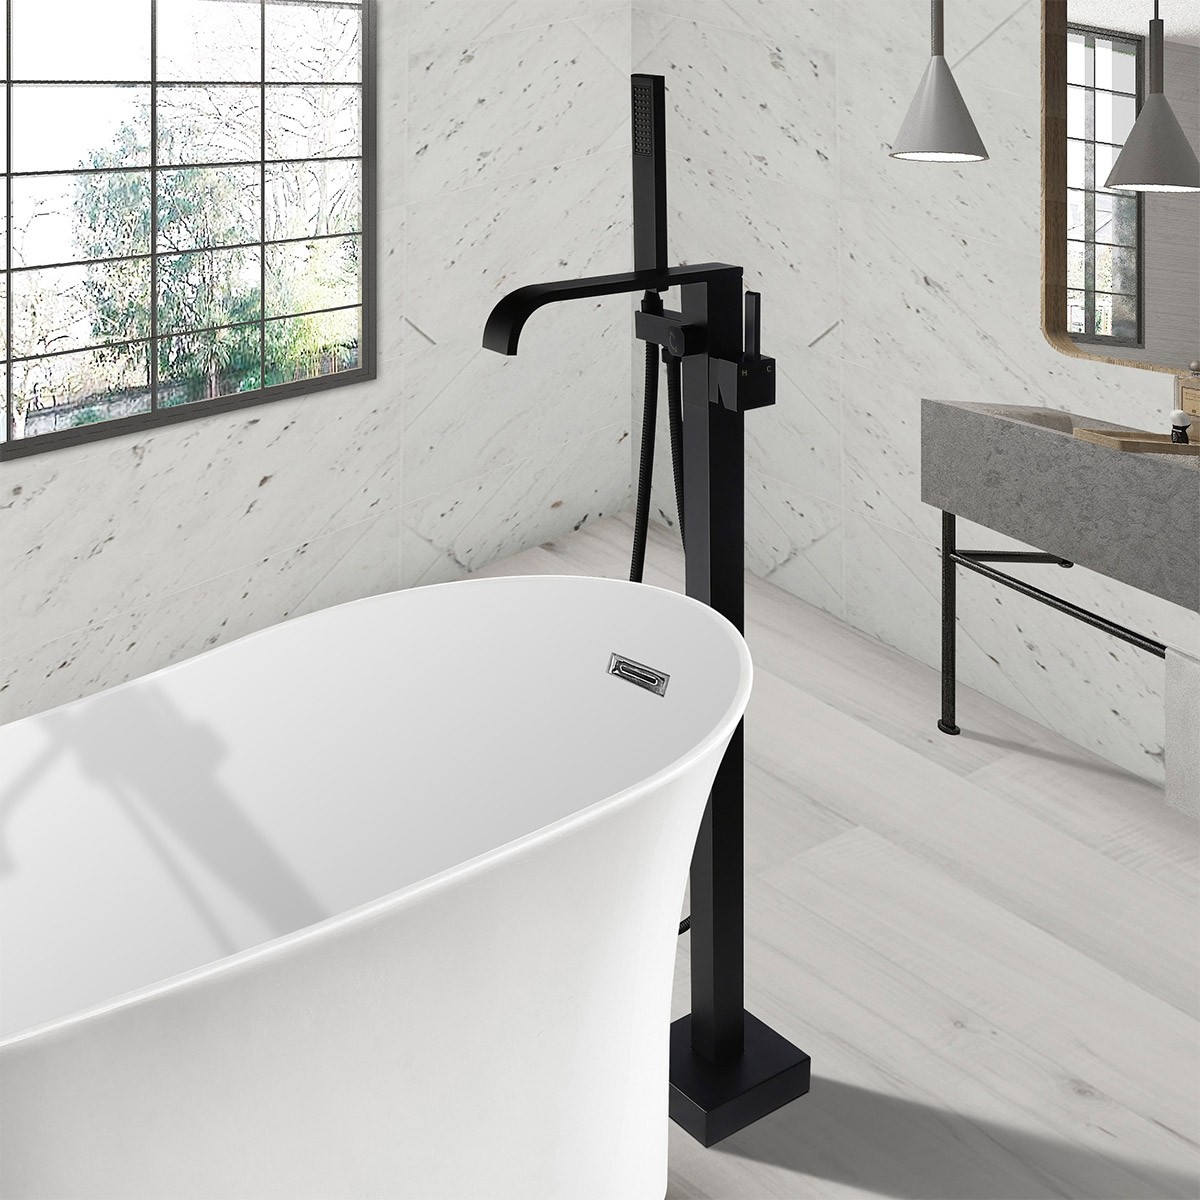 Matte Black Floor Mounted Tub Filler Freestanding Bathtub Faucet Brass Tap Single Handle with Handheld Shower